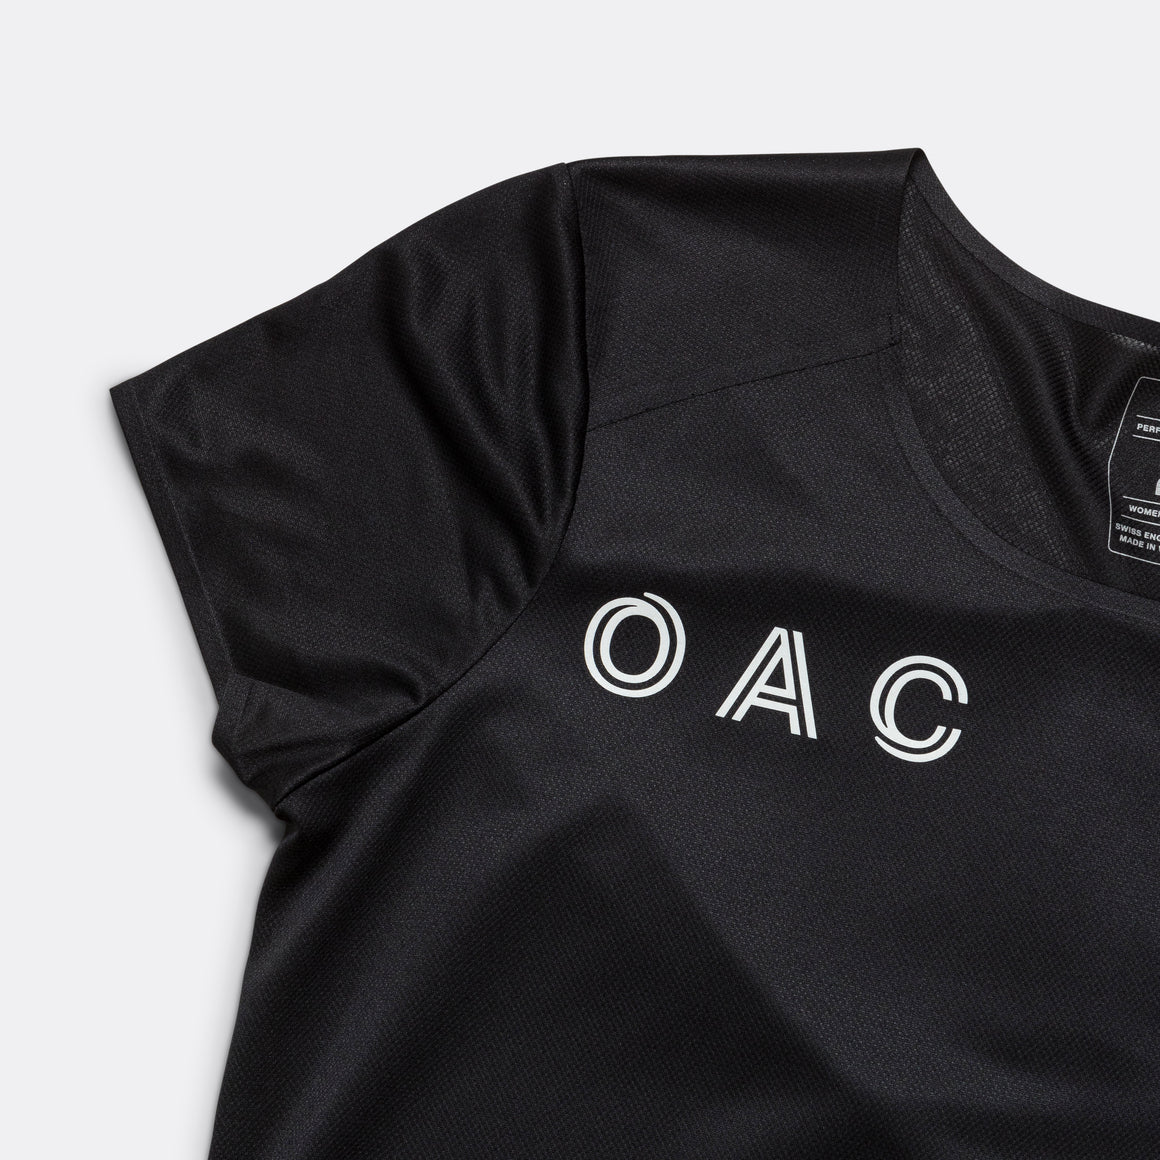 Womens Performance T-Shirt OAC - Black